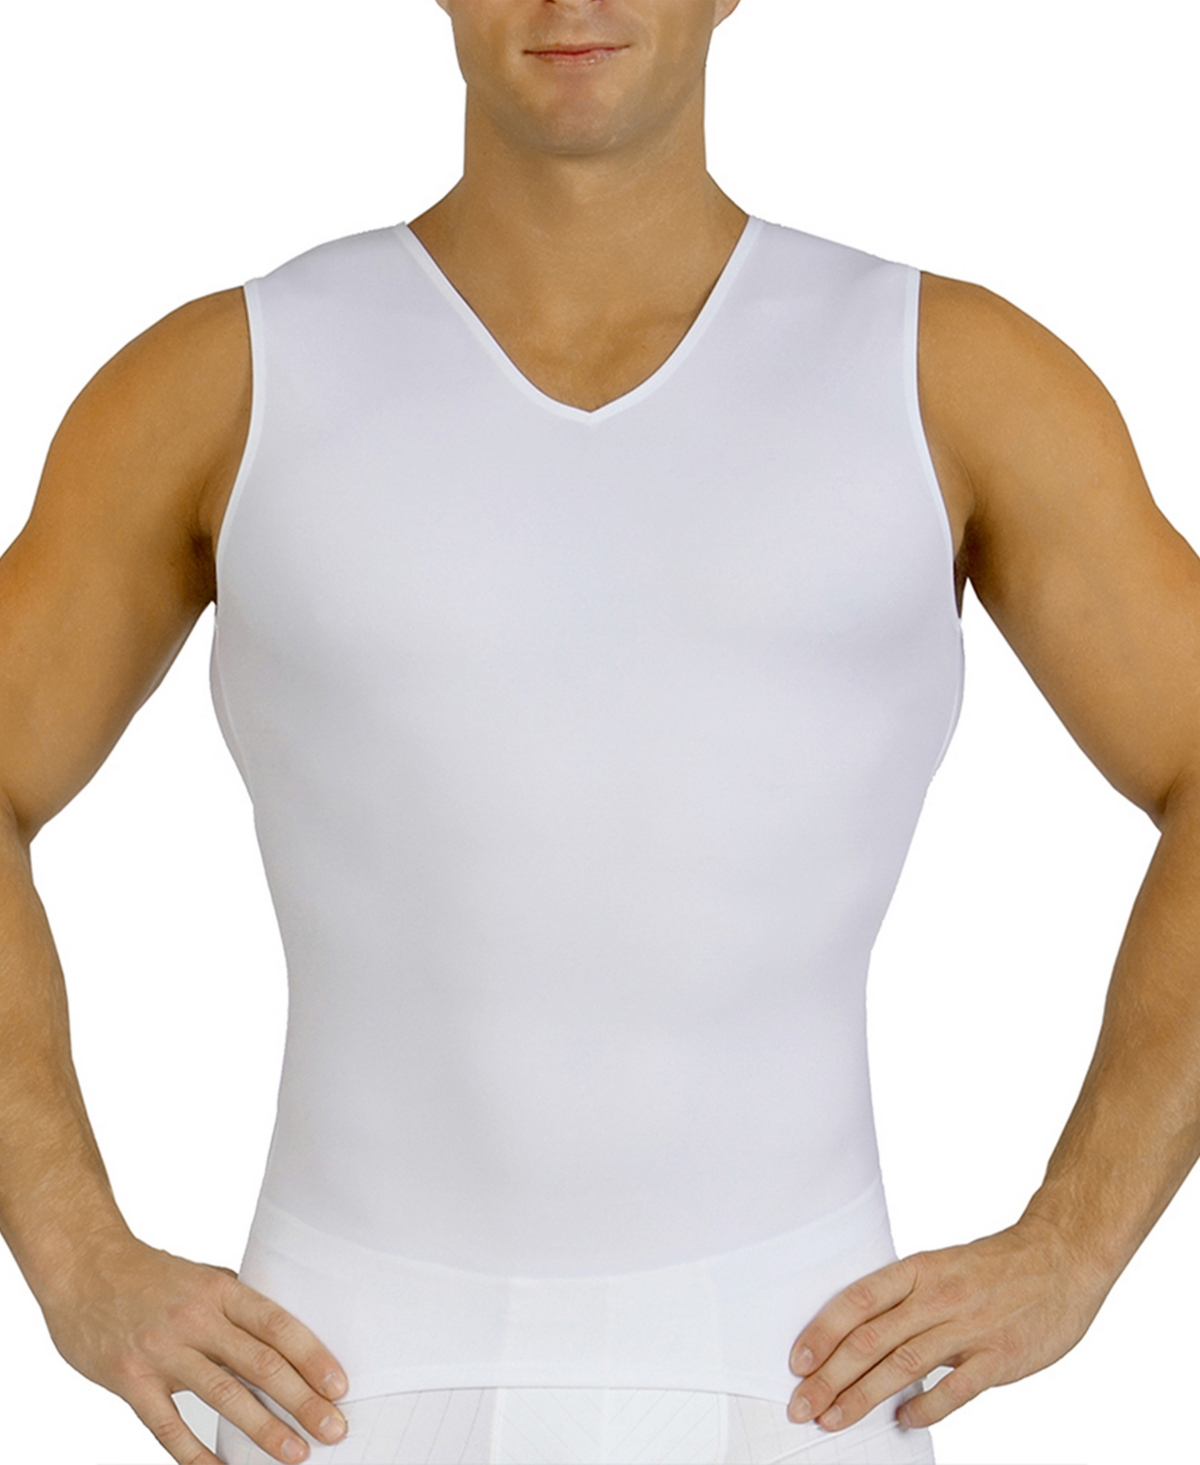 Men's Power Mesh Compression Sleeveless V-Neck Shirt - White